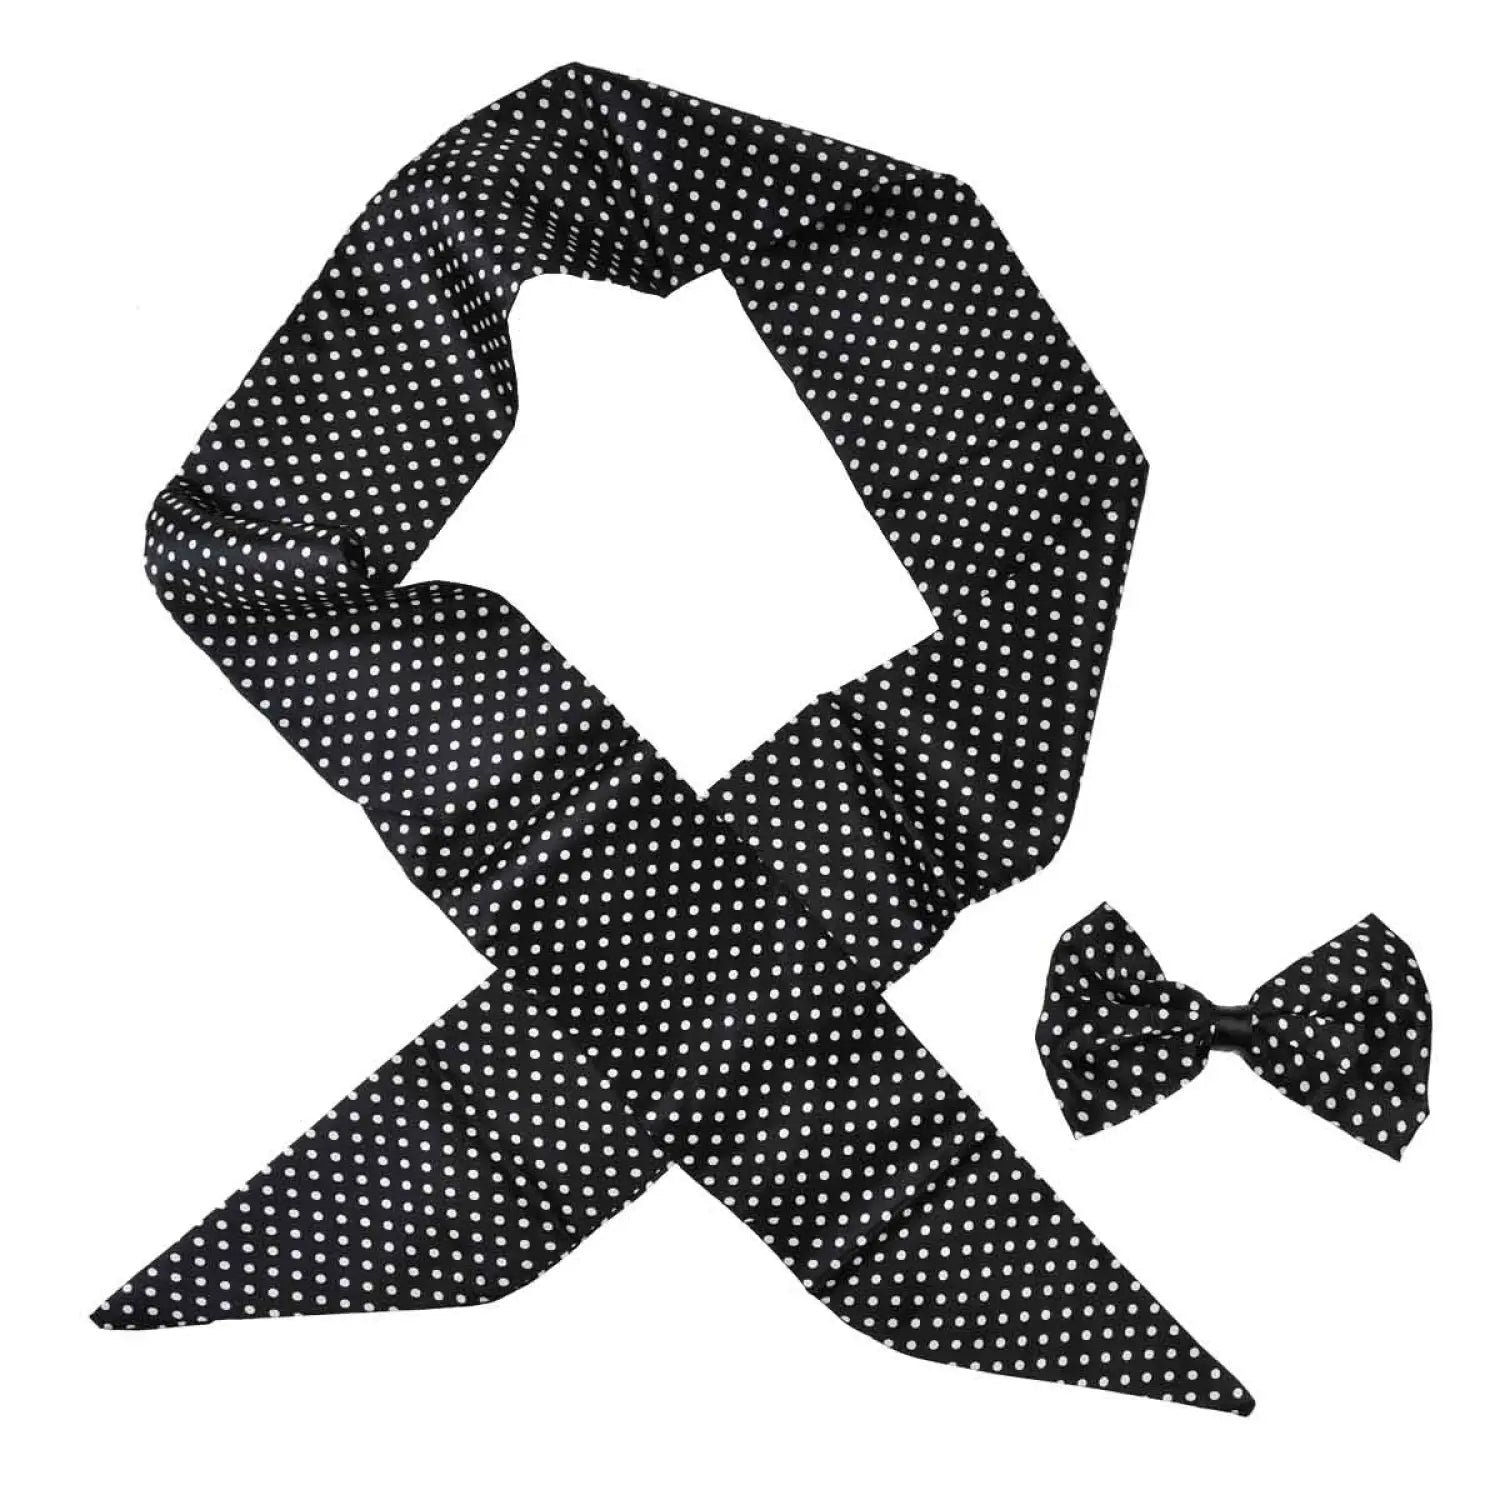 Black and white polka dot scarf and bow tie set for hair pin set in Polka Dot Satin Sash Scarf & Matching Hair Pin Set.